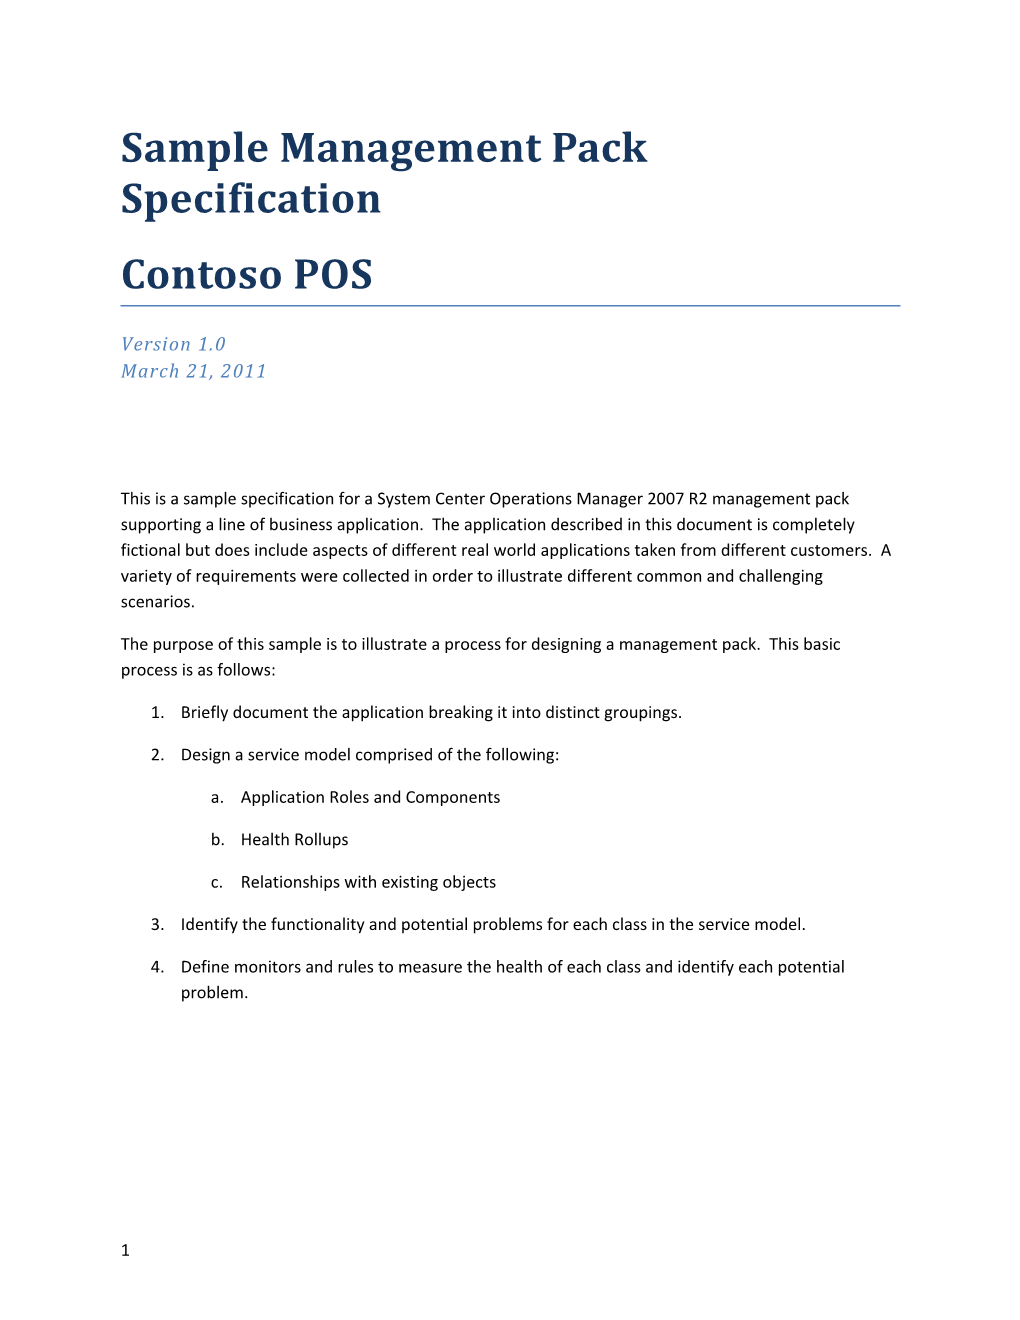 Sample Management Pack Specification